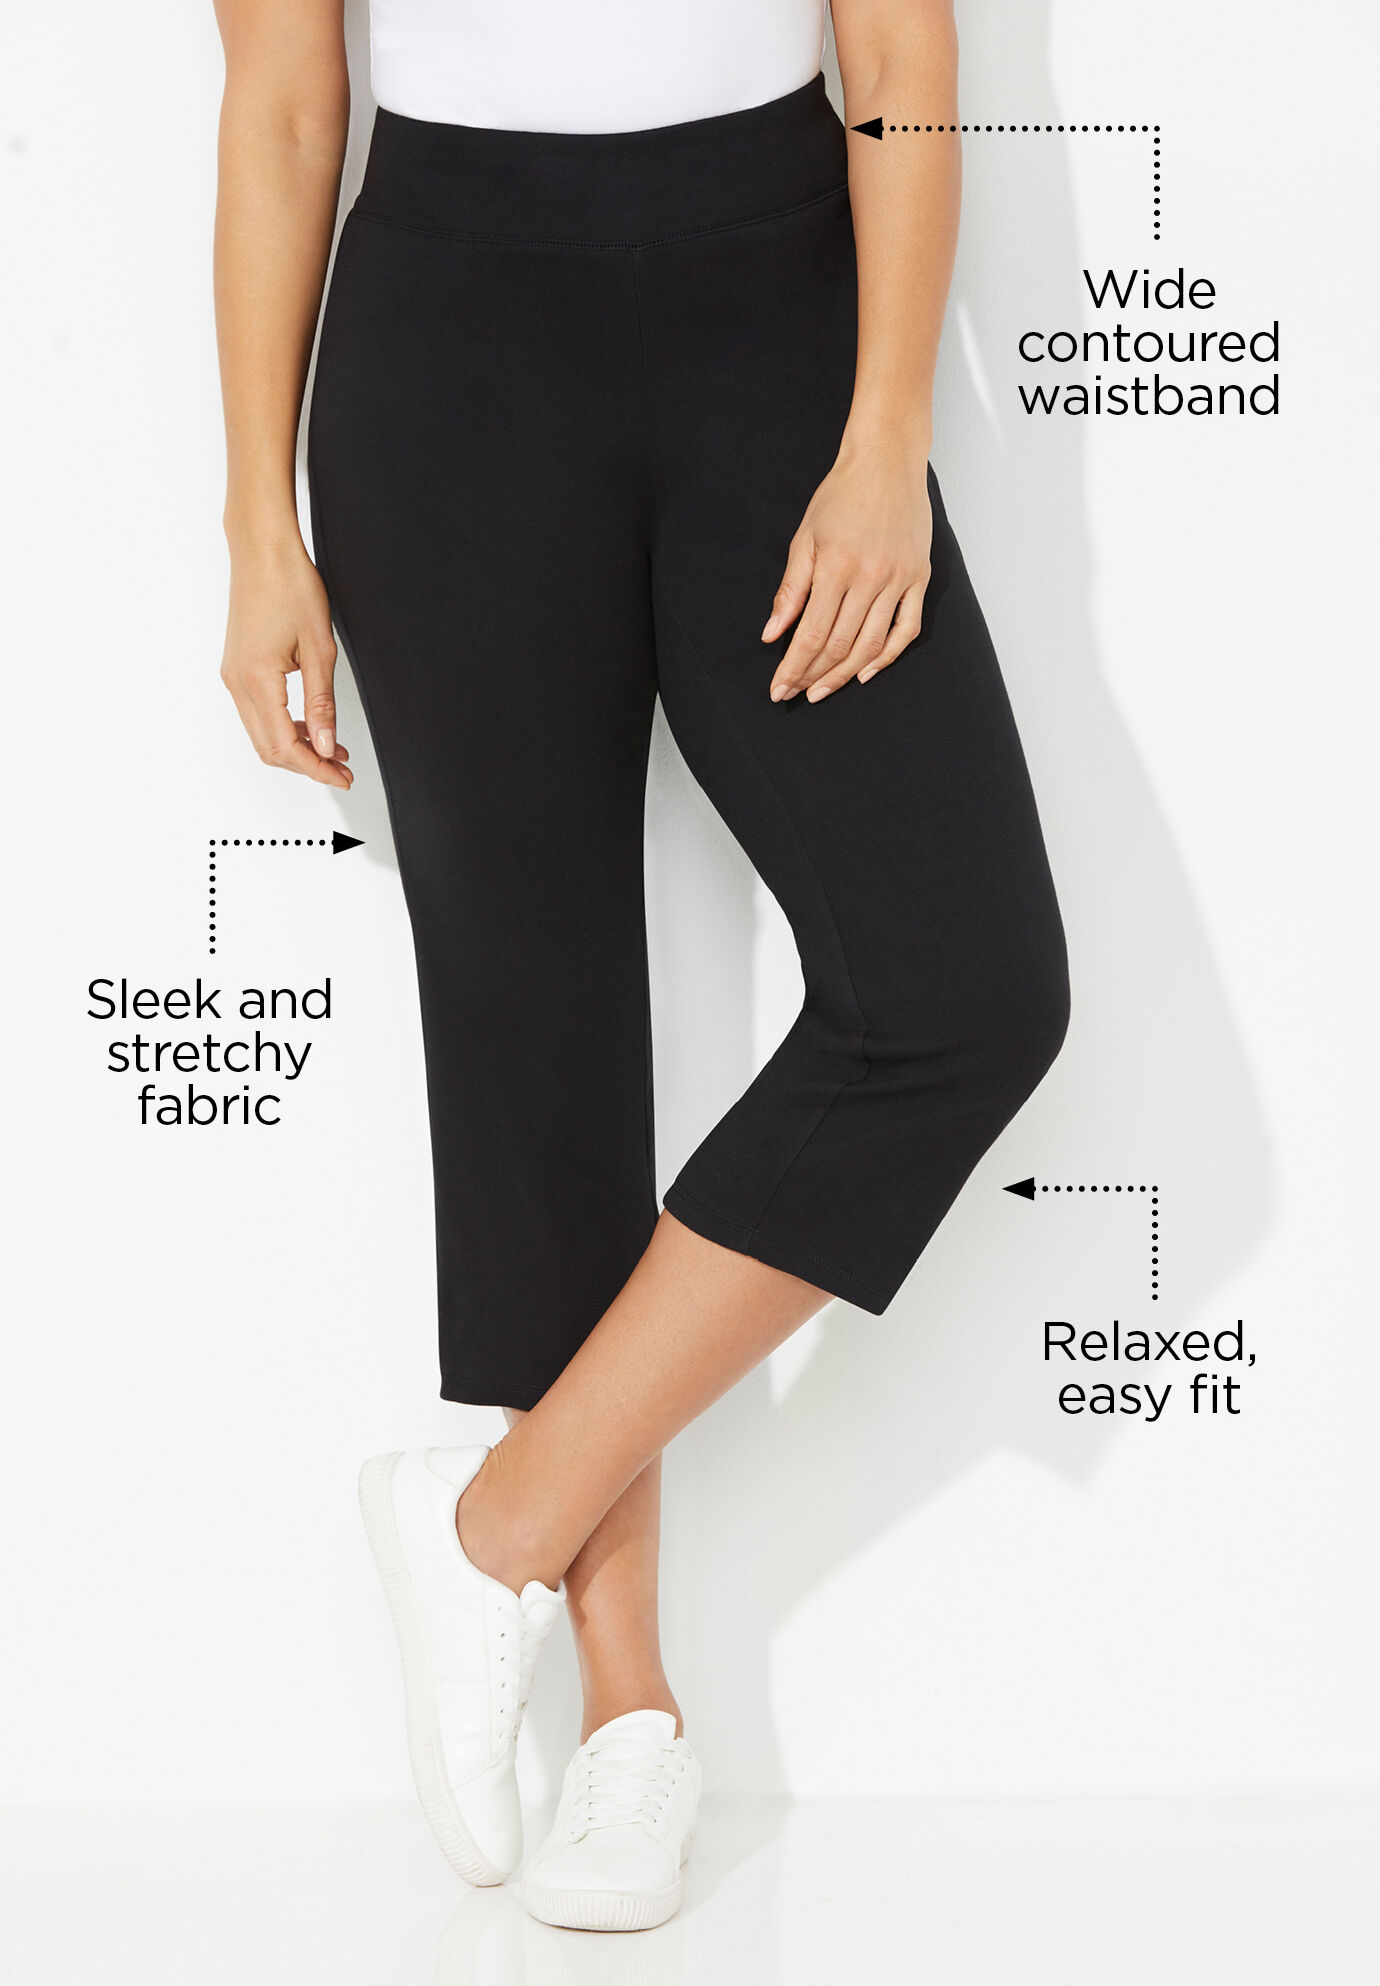 Terra & Sky Women's Black Leggings Plus Size 4X - $9 - From Jessica